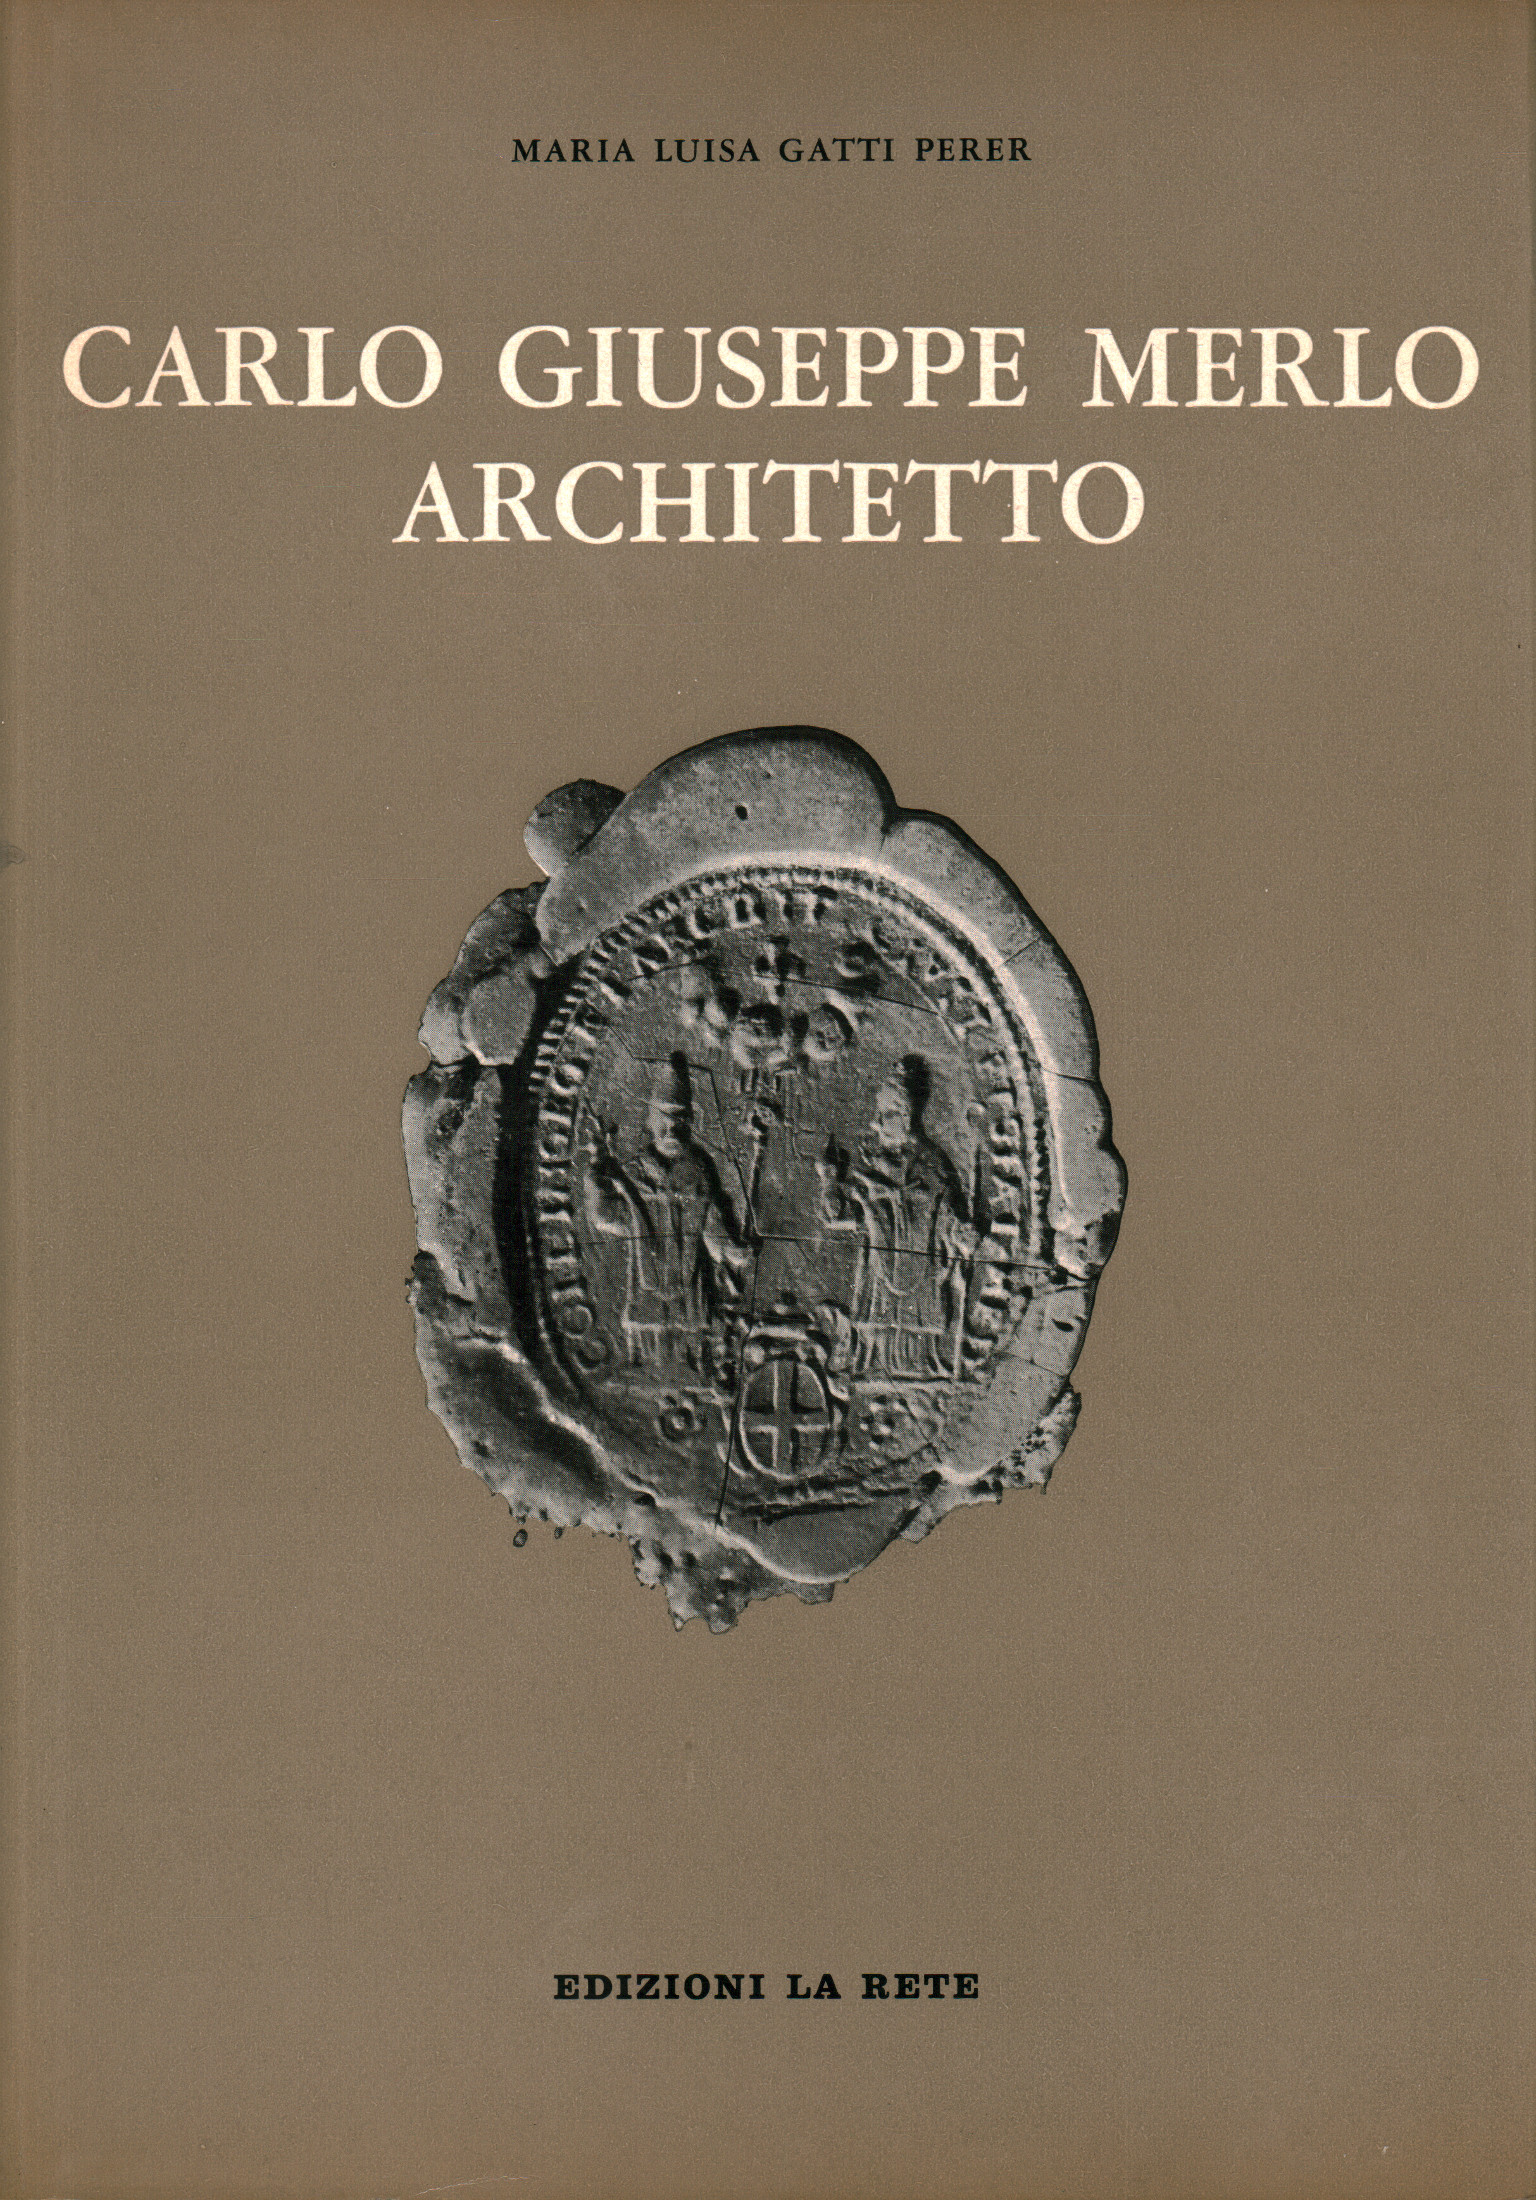 Carlo Giuseppe Merlo architect